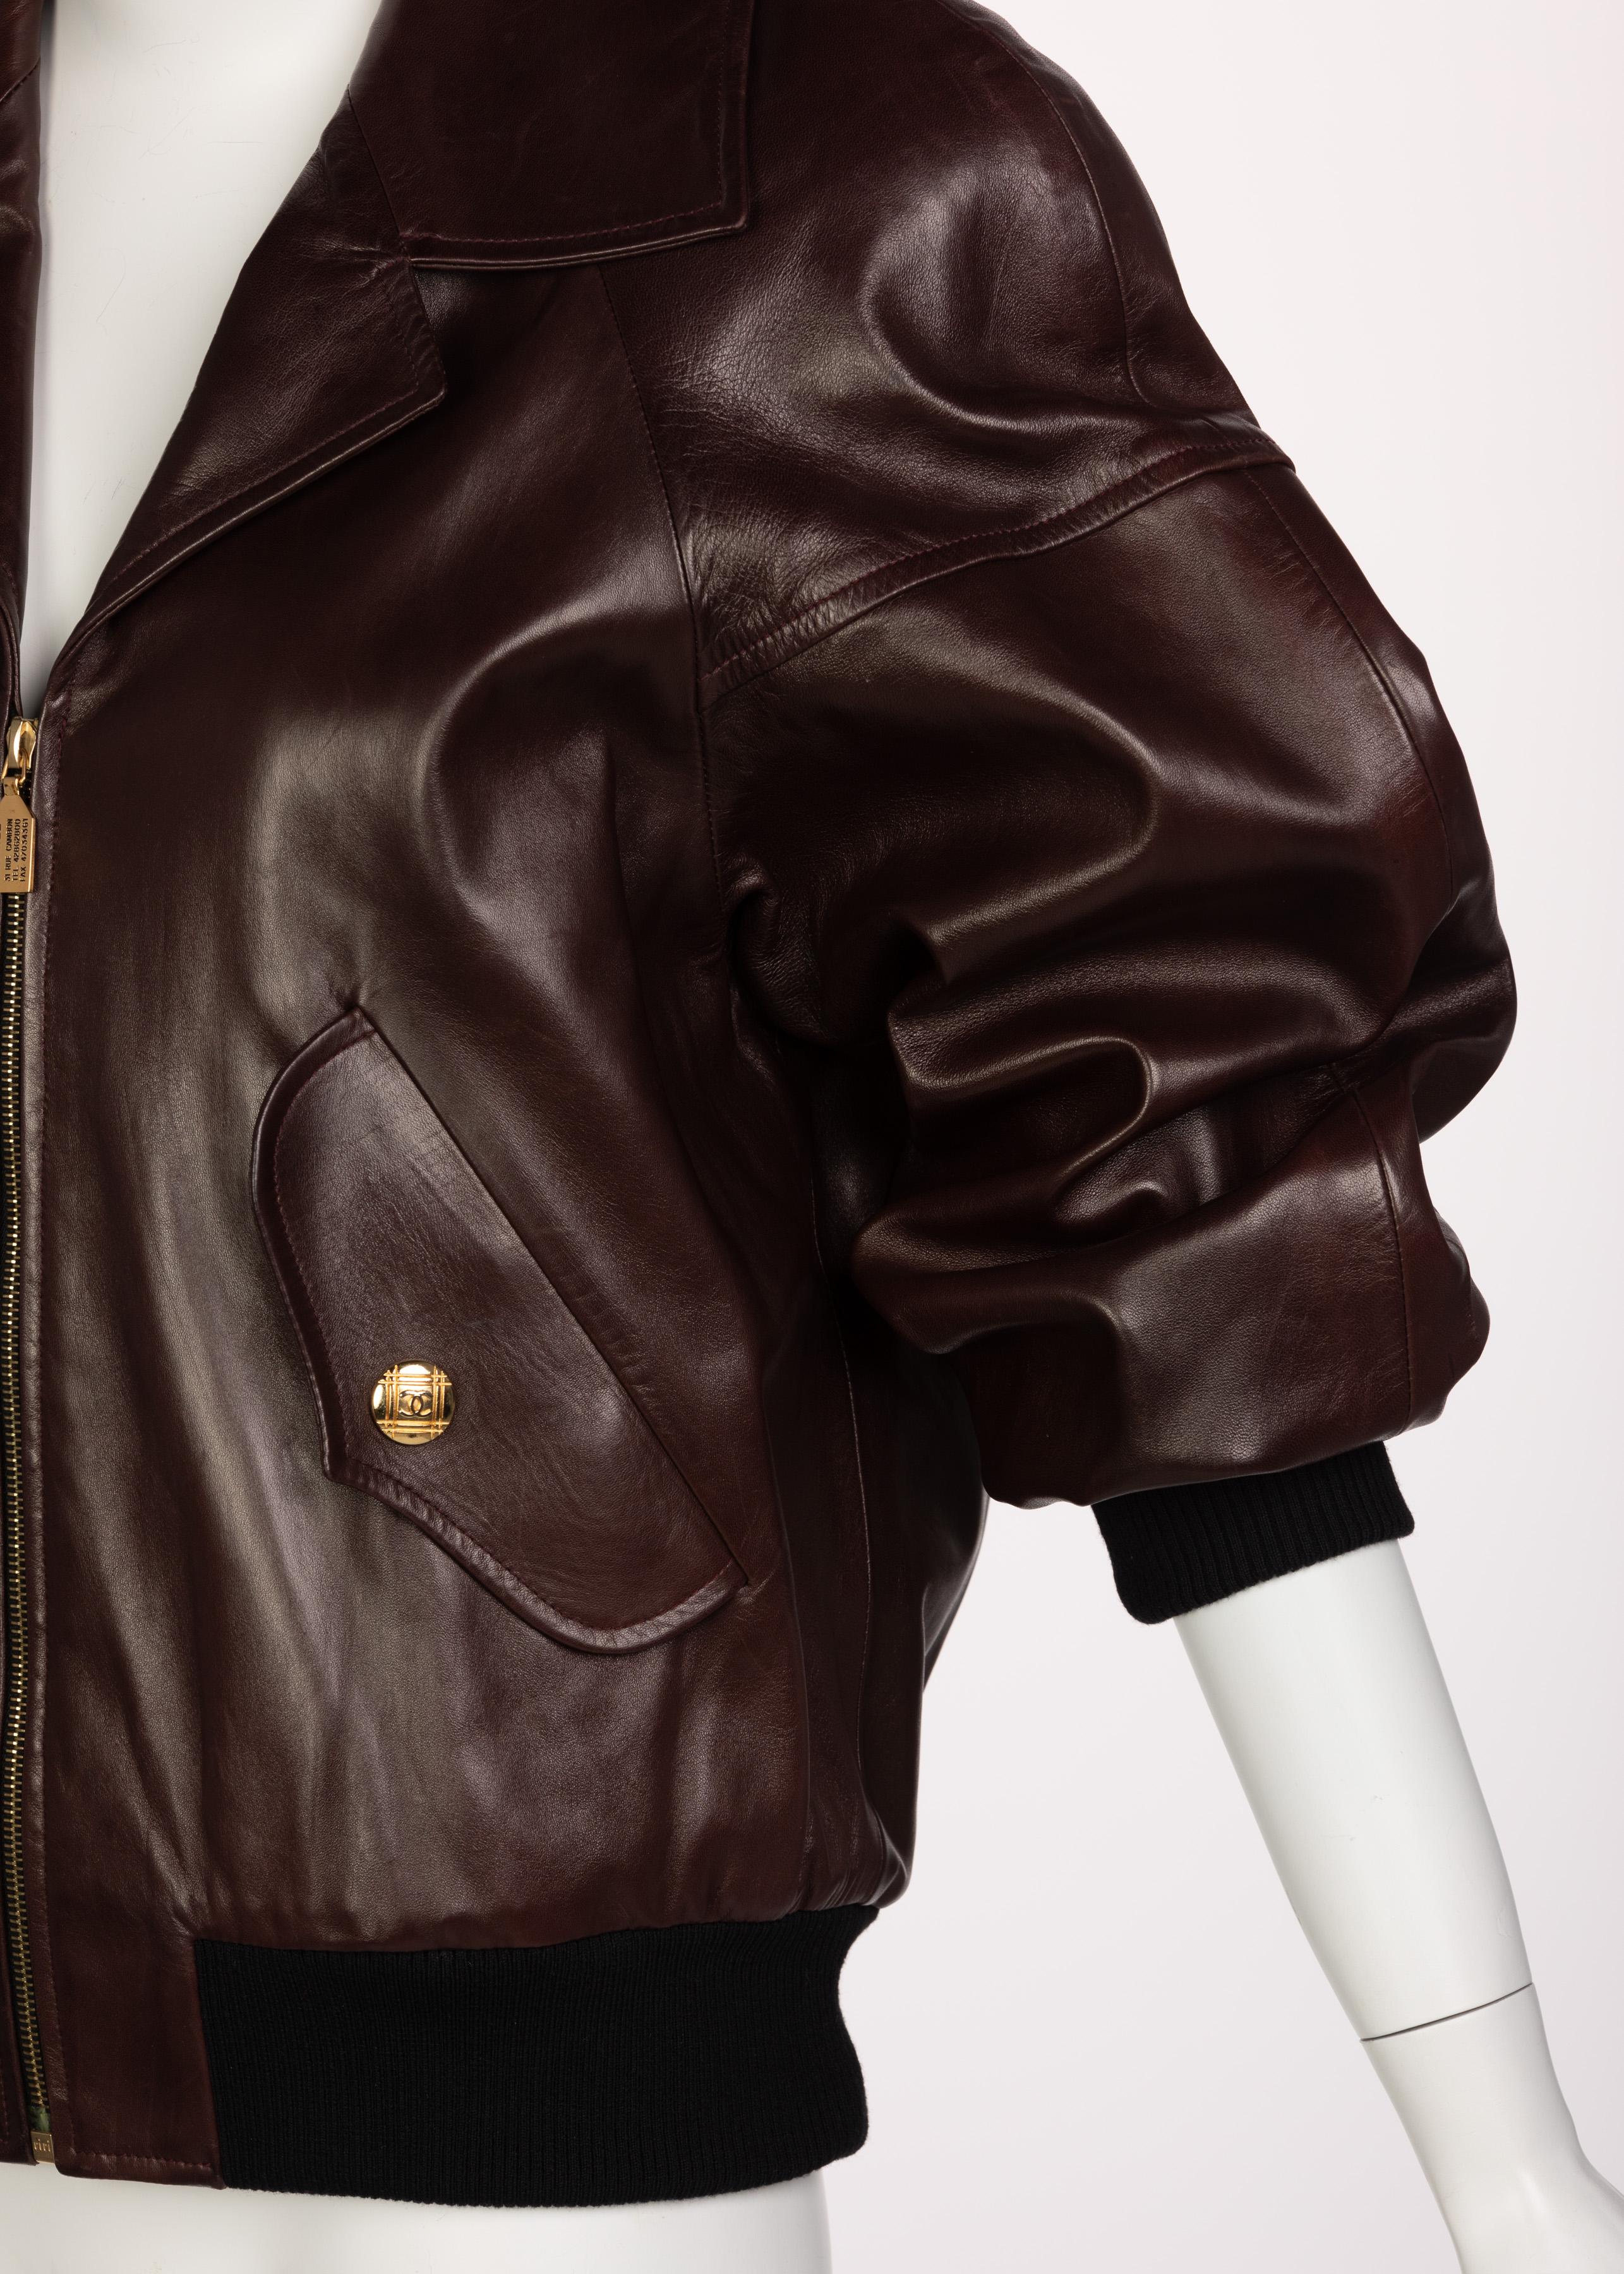 Women's or Men's Chanel Brown Leather Bomber Jacket Runway 1990s